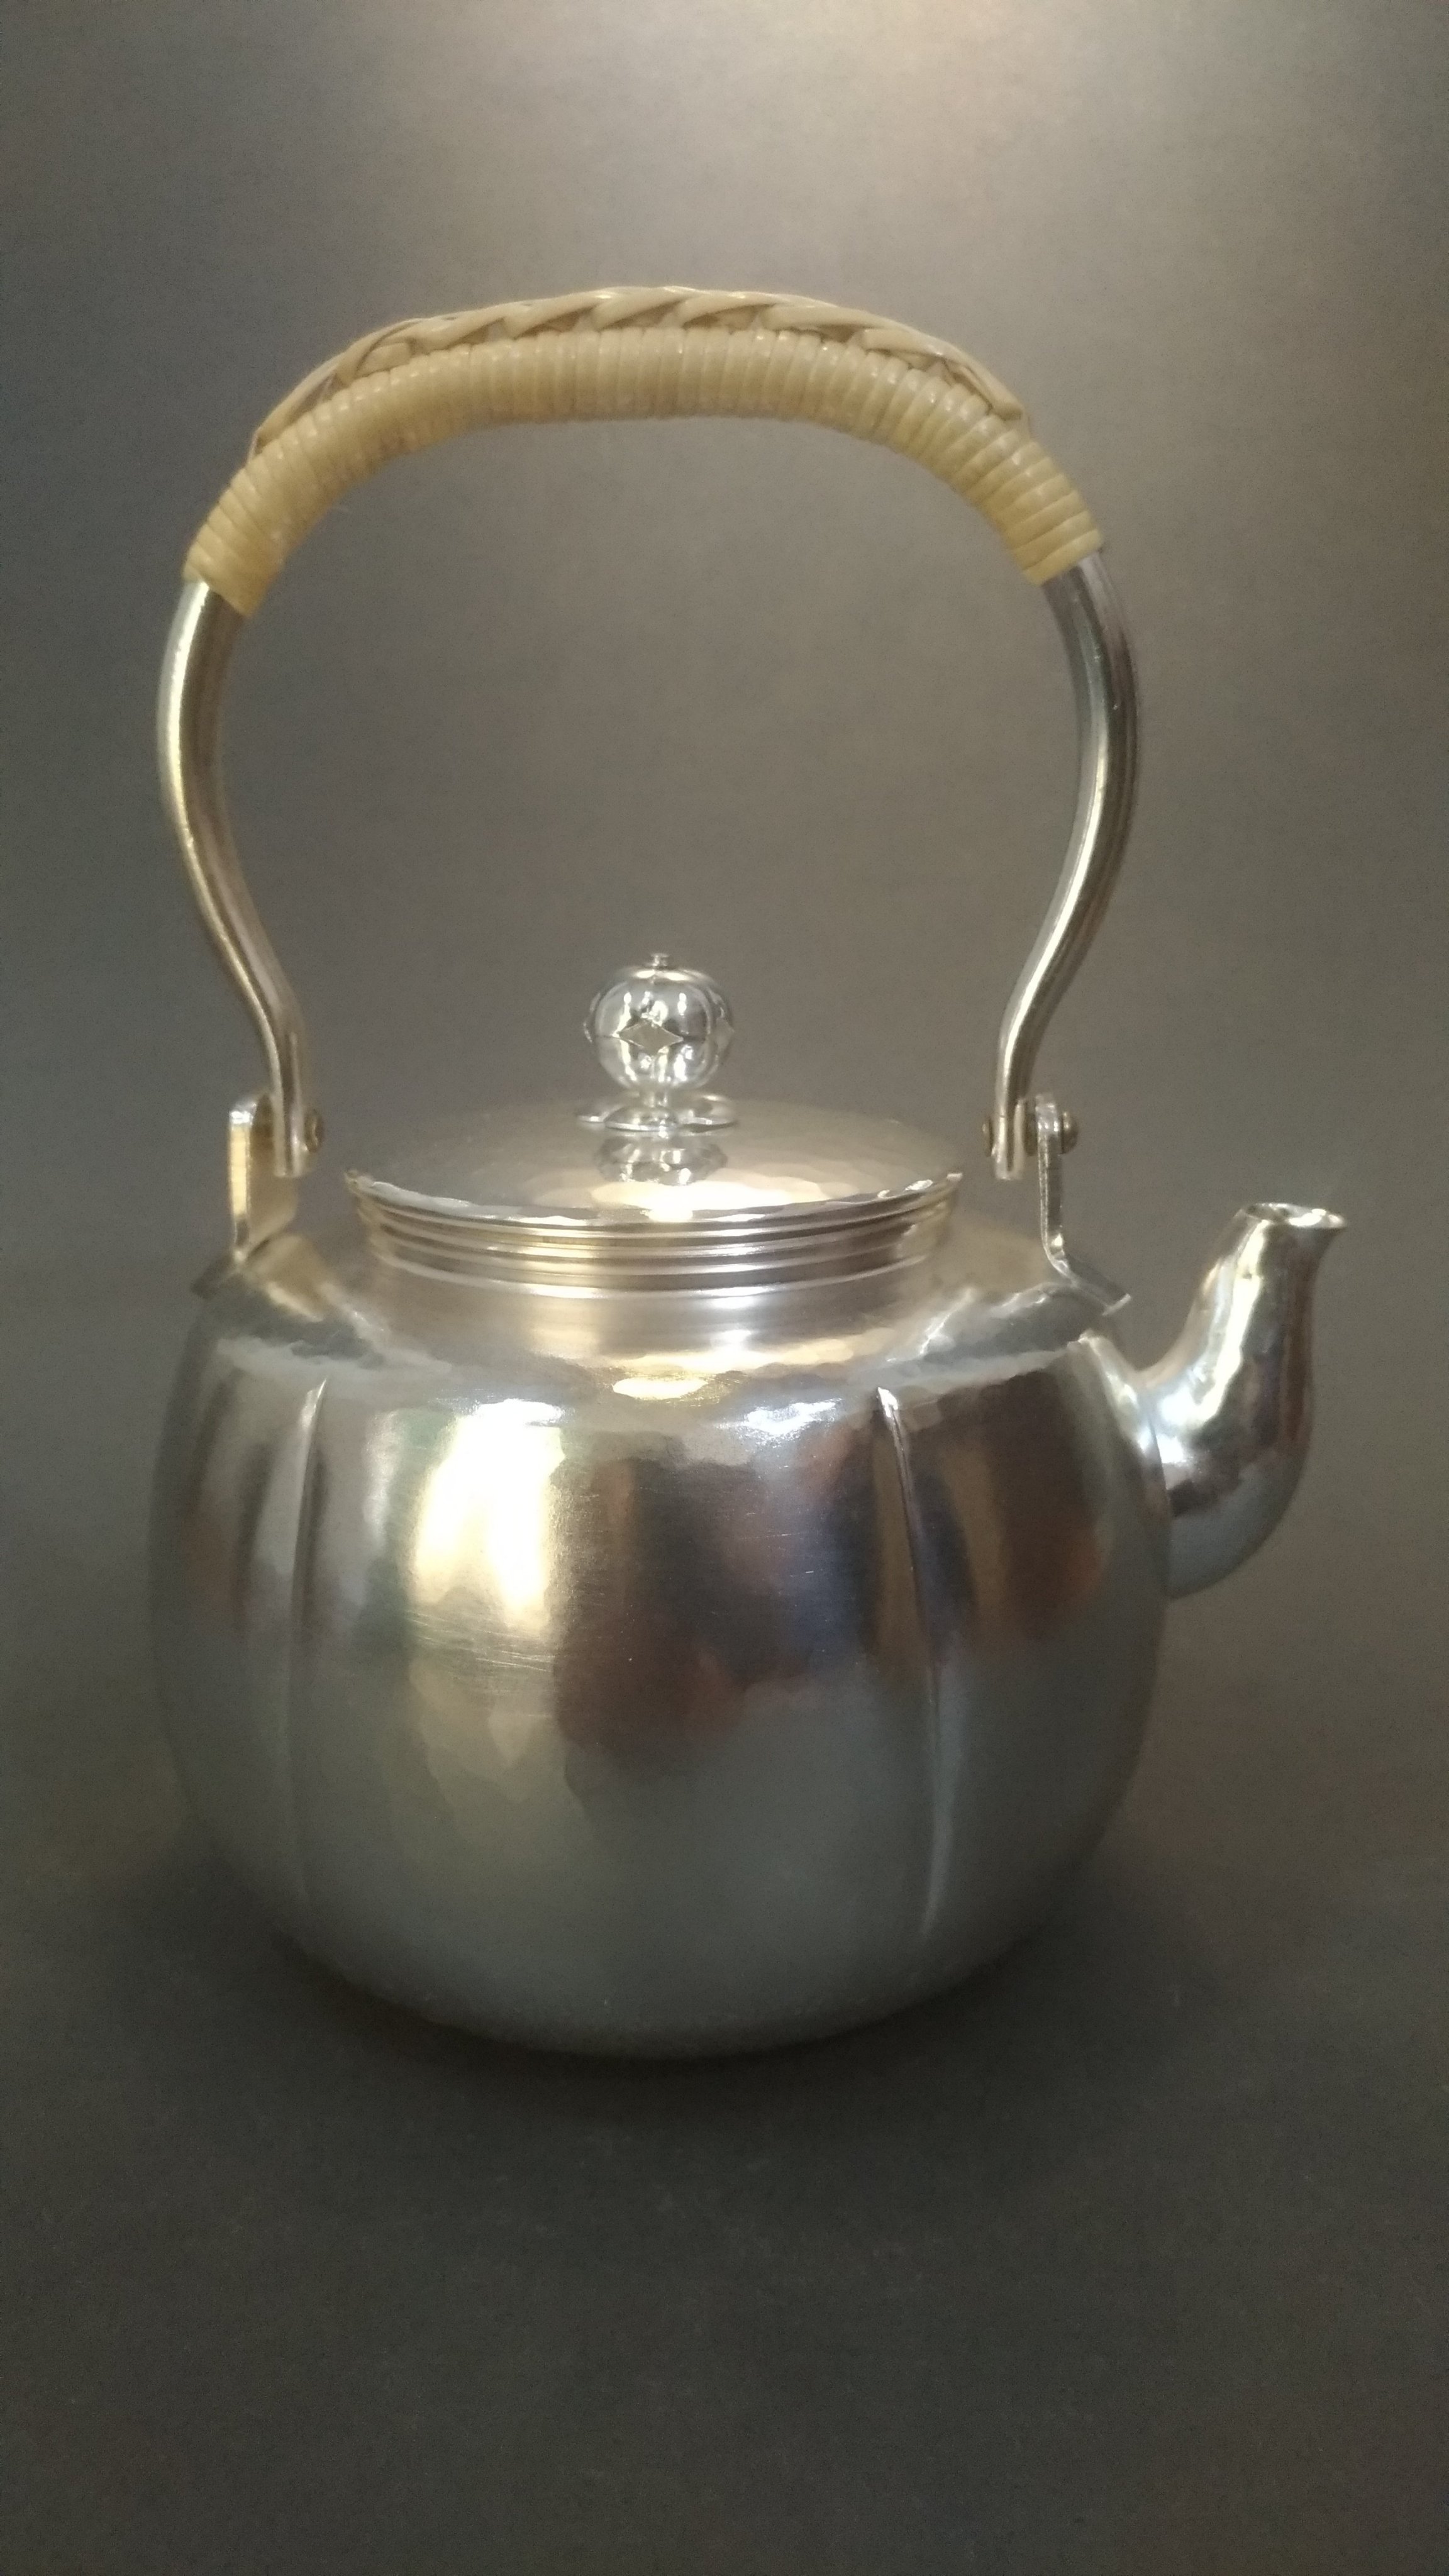 茶道具 銀瓶 湯沸 阿古陀型 銀メッキ 5合 秀峰堂 新品未使用 - 美術品